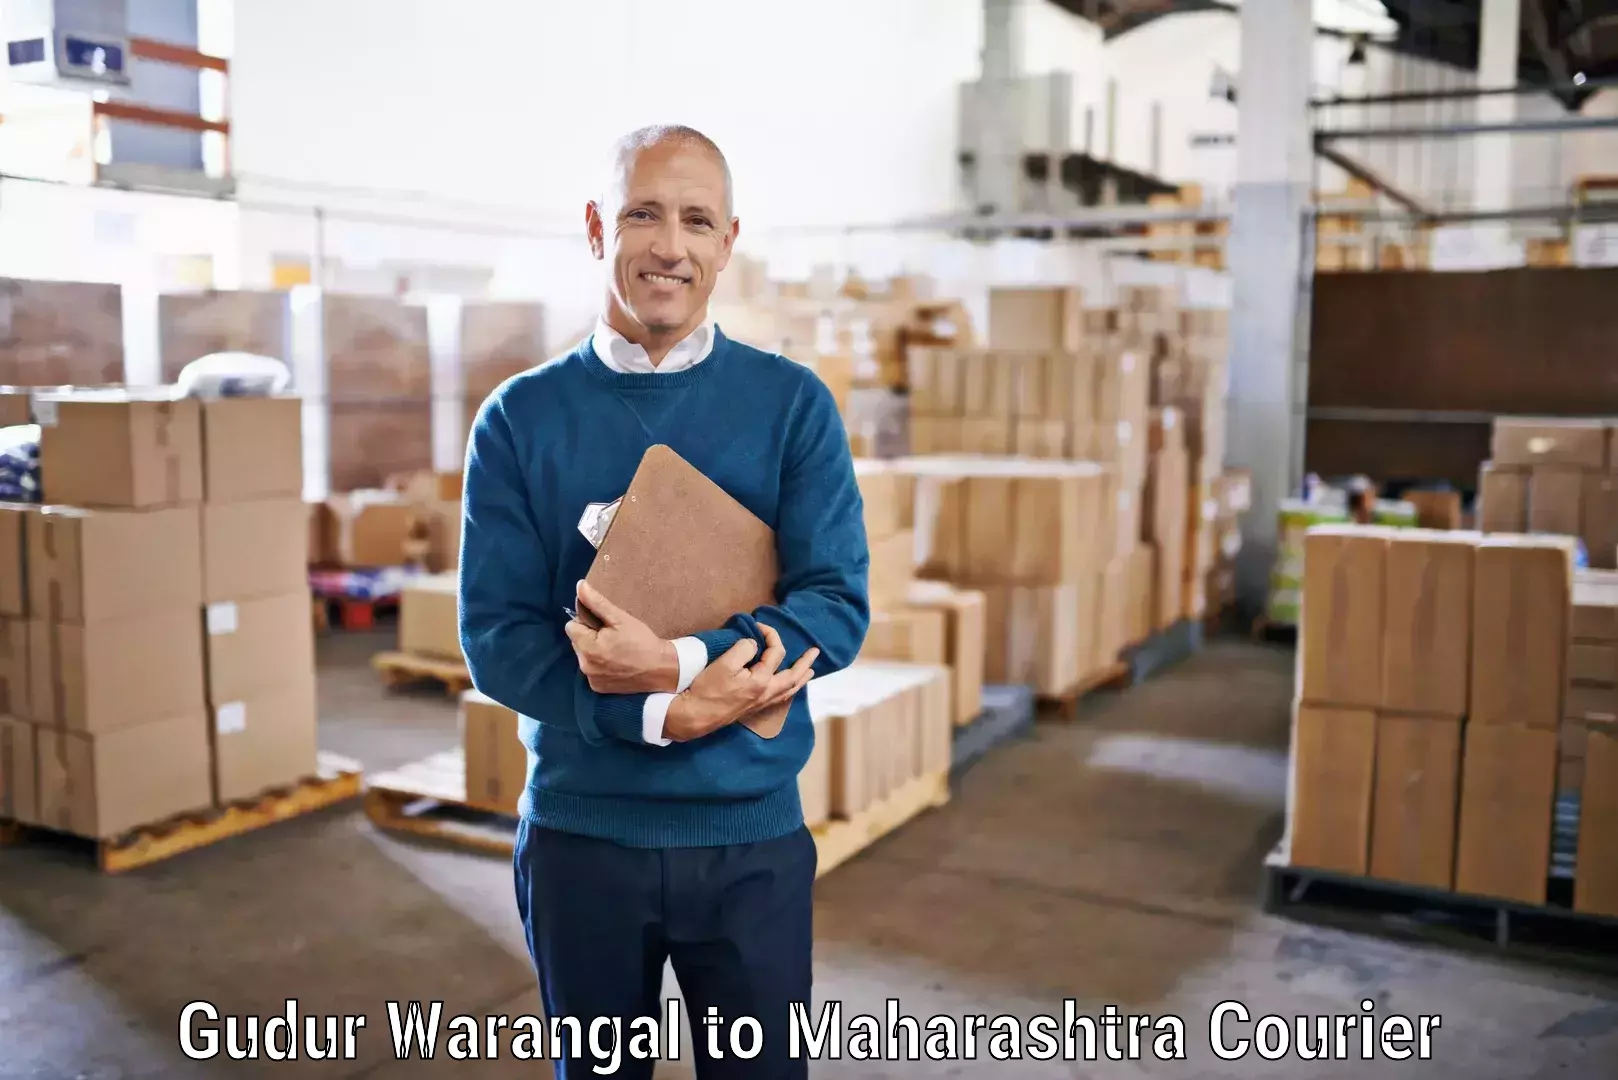 Customer-focused courier Gudur Warangal to Symbiosis International Pune